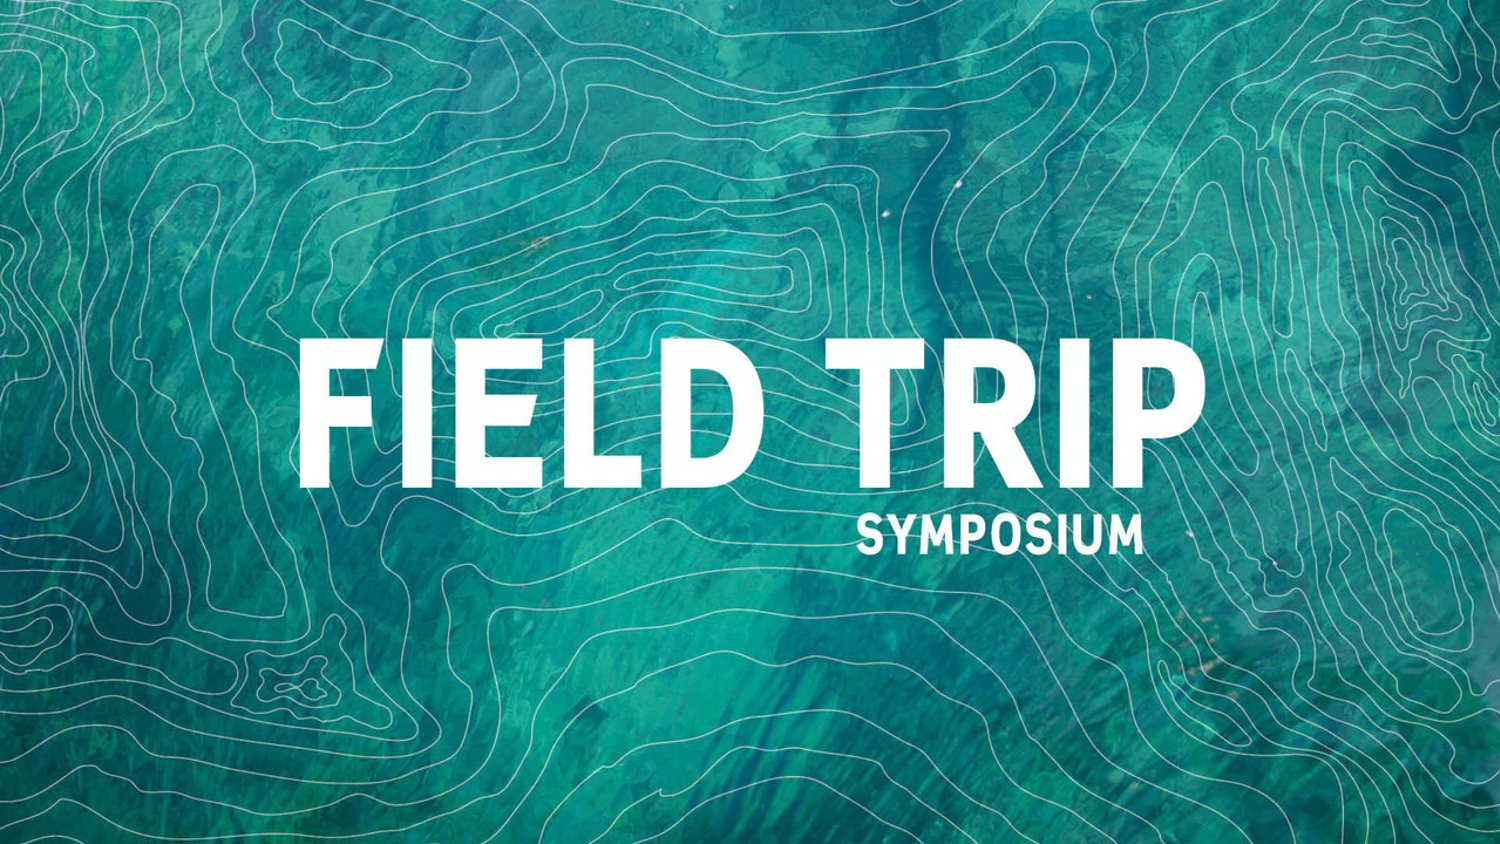 Field trip symposium 2021